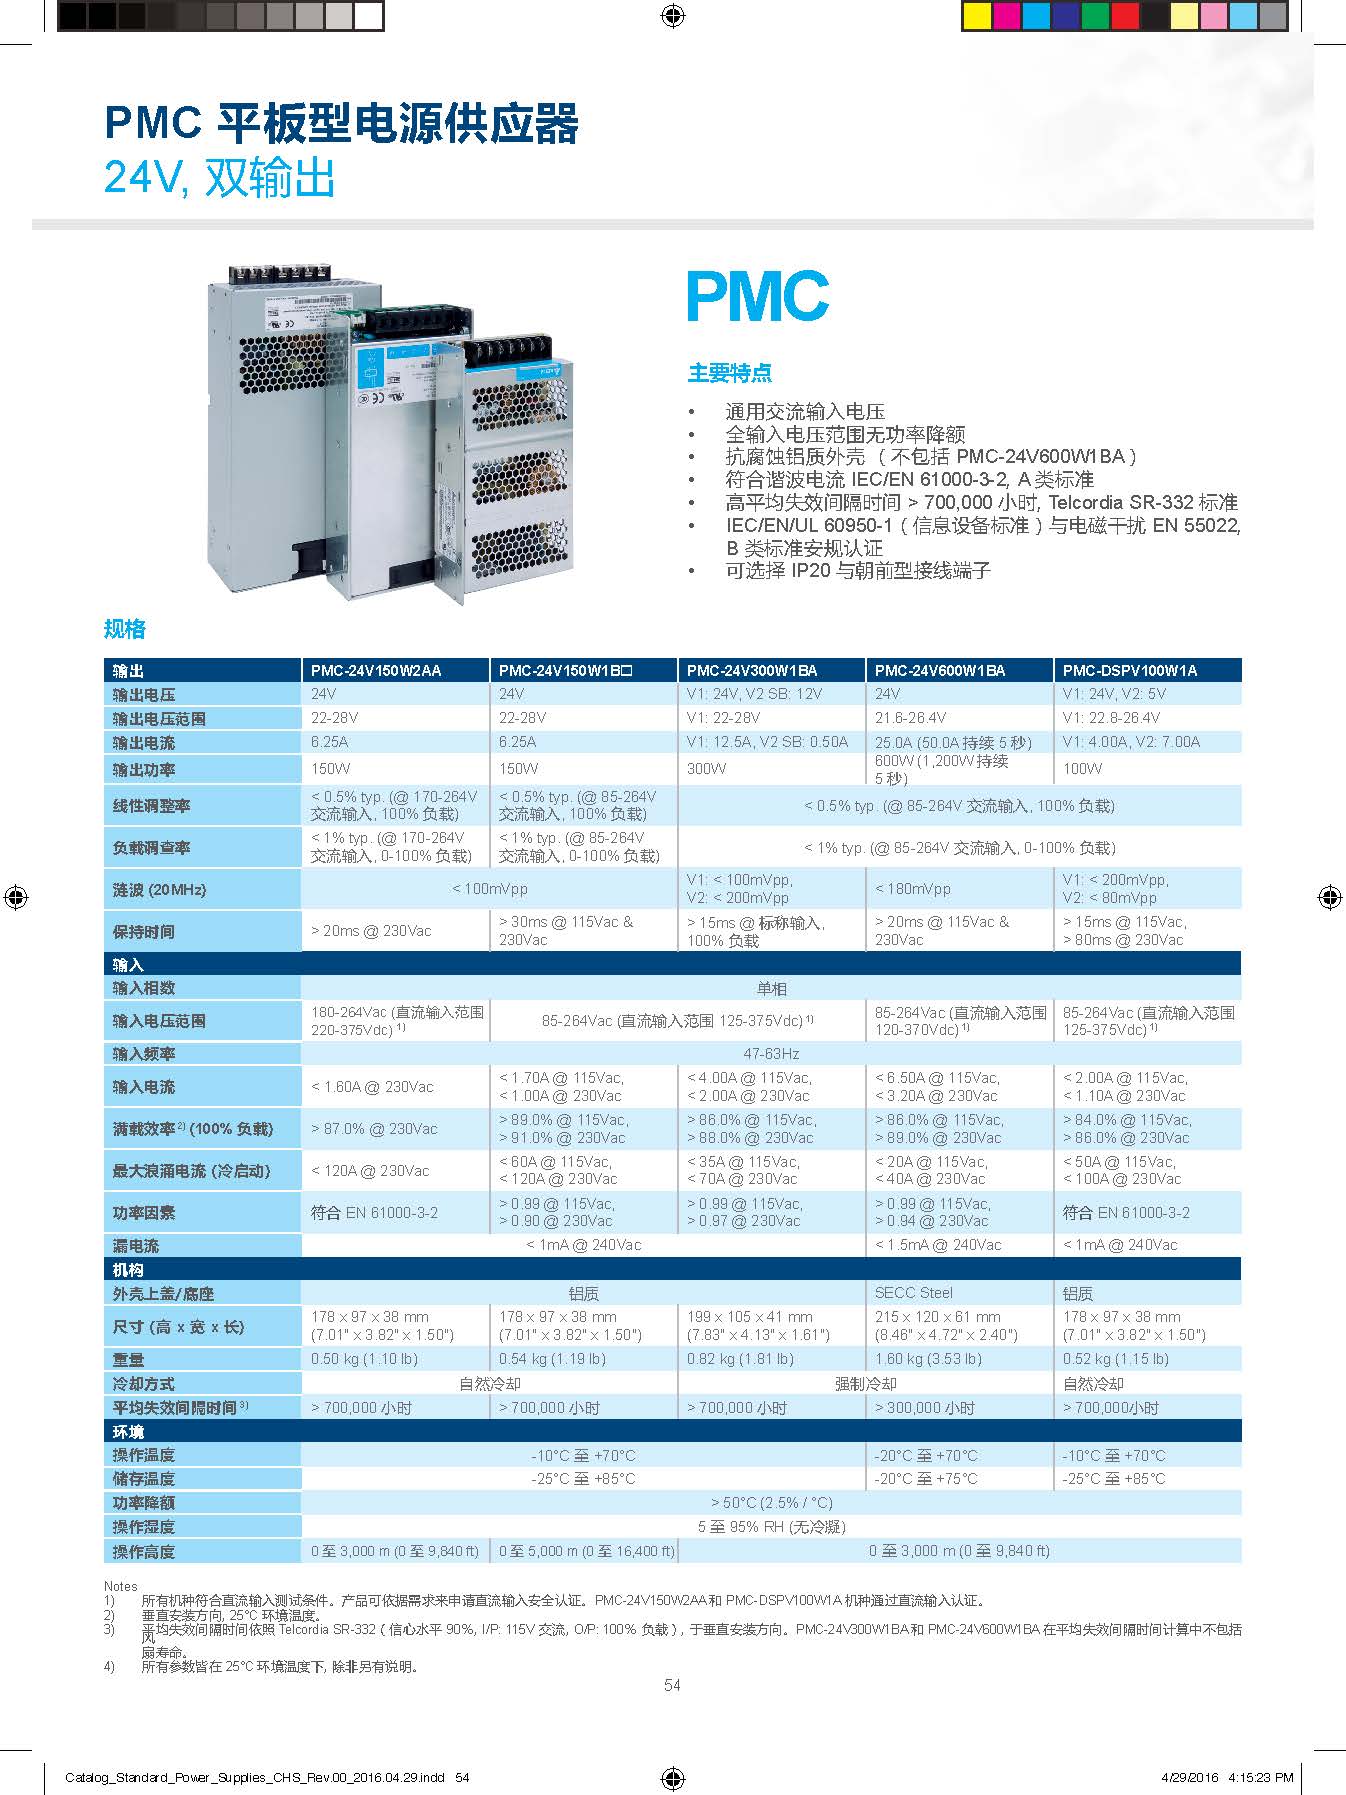 PMC-24V双路系列电源